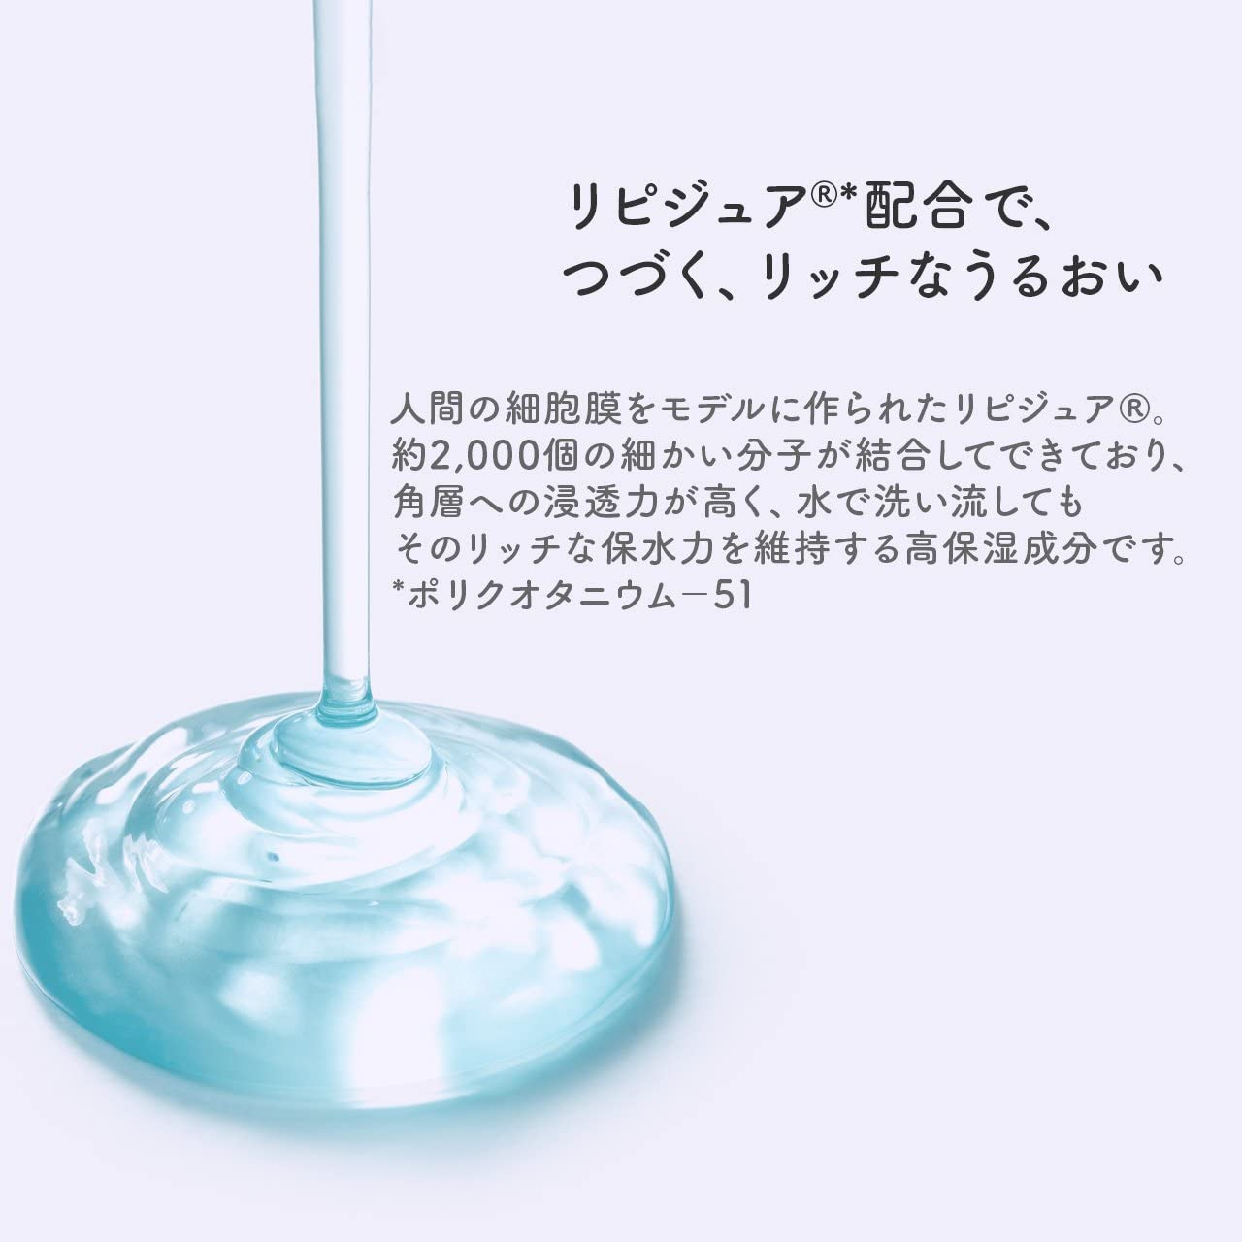 LuLuLun(ルルルン) モイストジェルクリーム (保湿タイプ)の商品画像5 